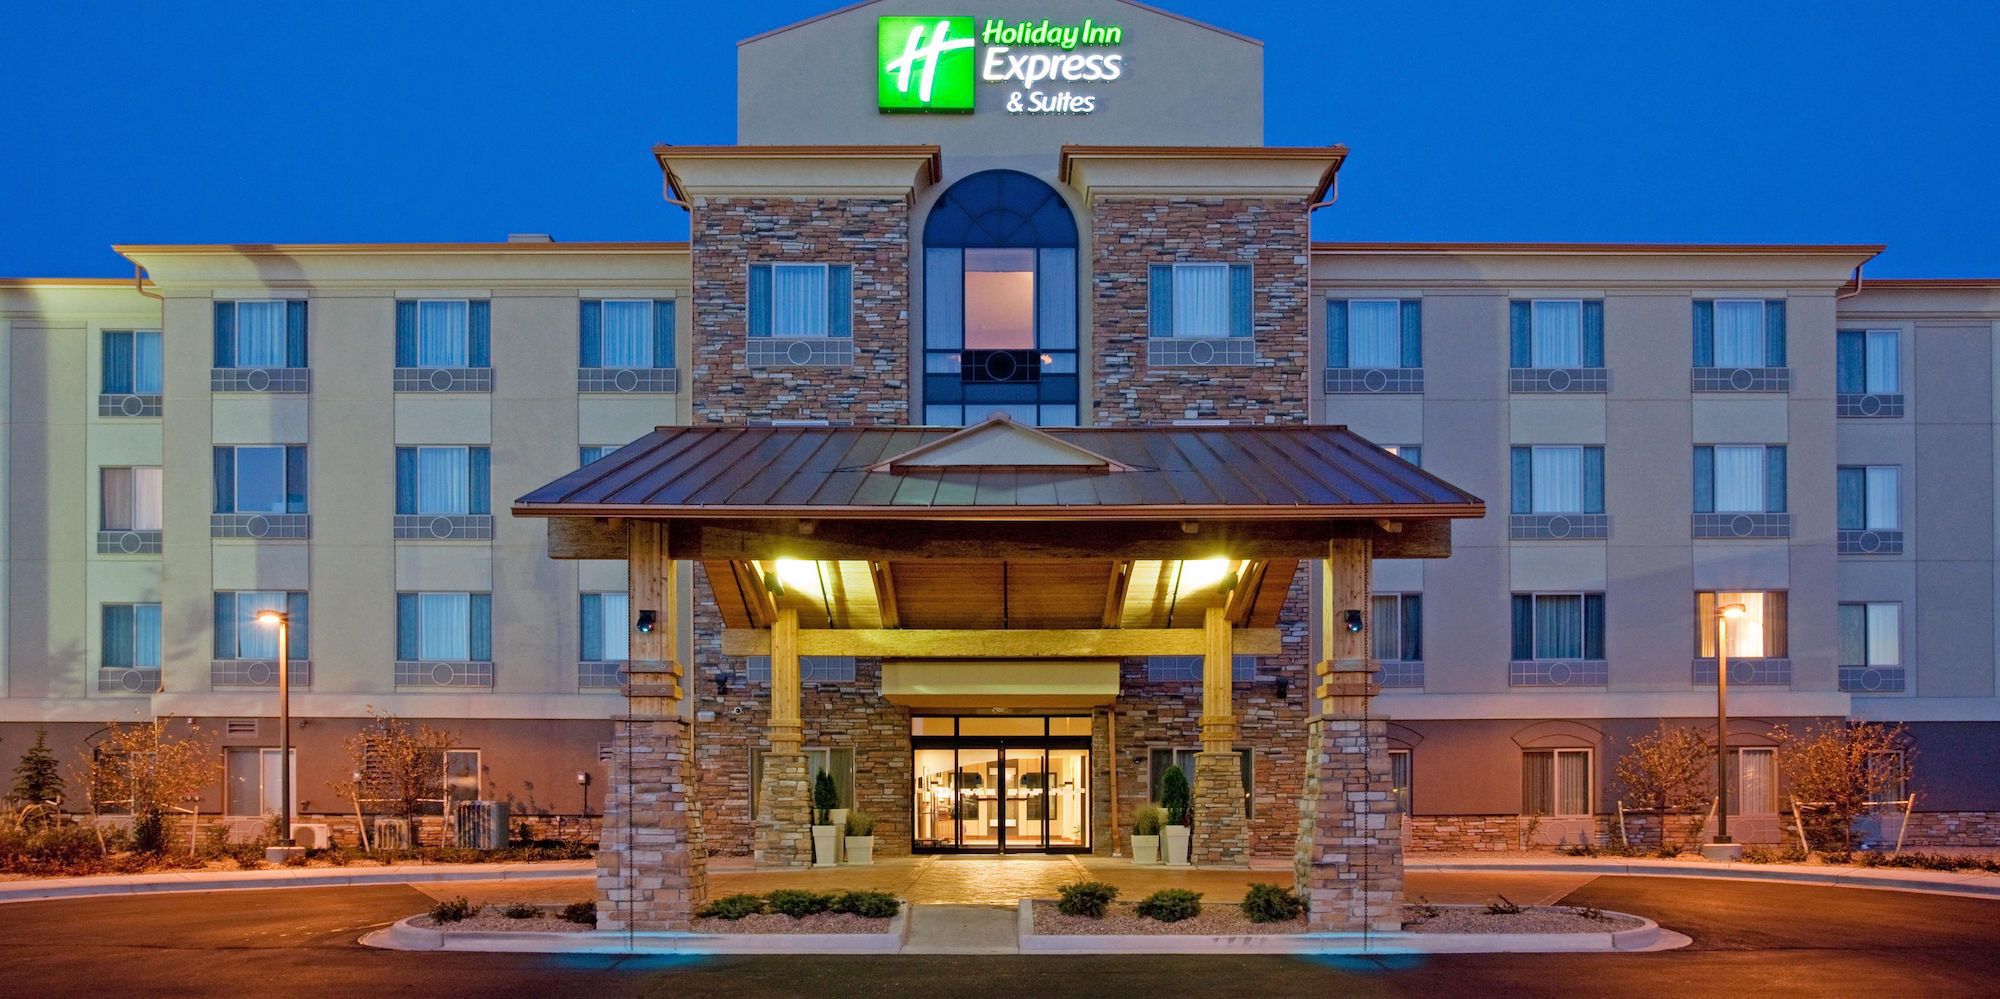 Photo of Holiday Inn Express & Suites Denver Airport, Denver, CO